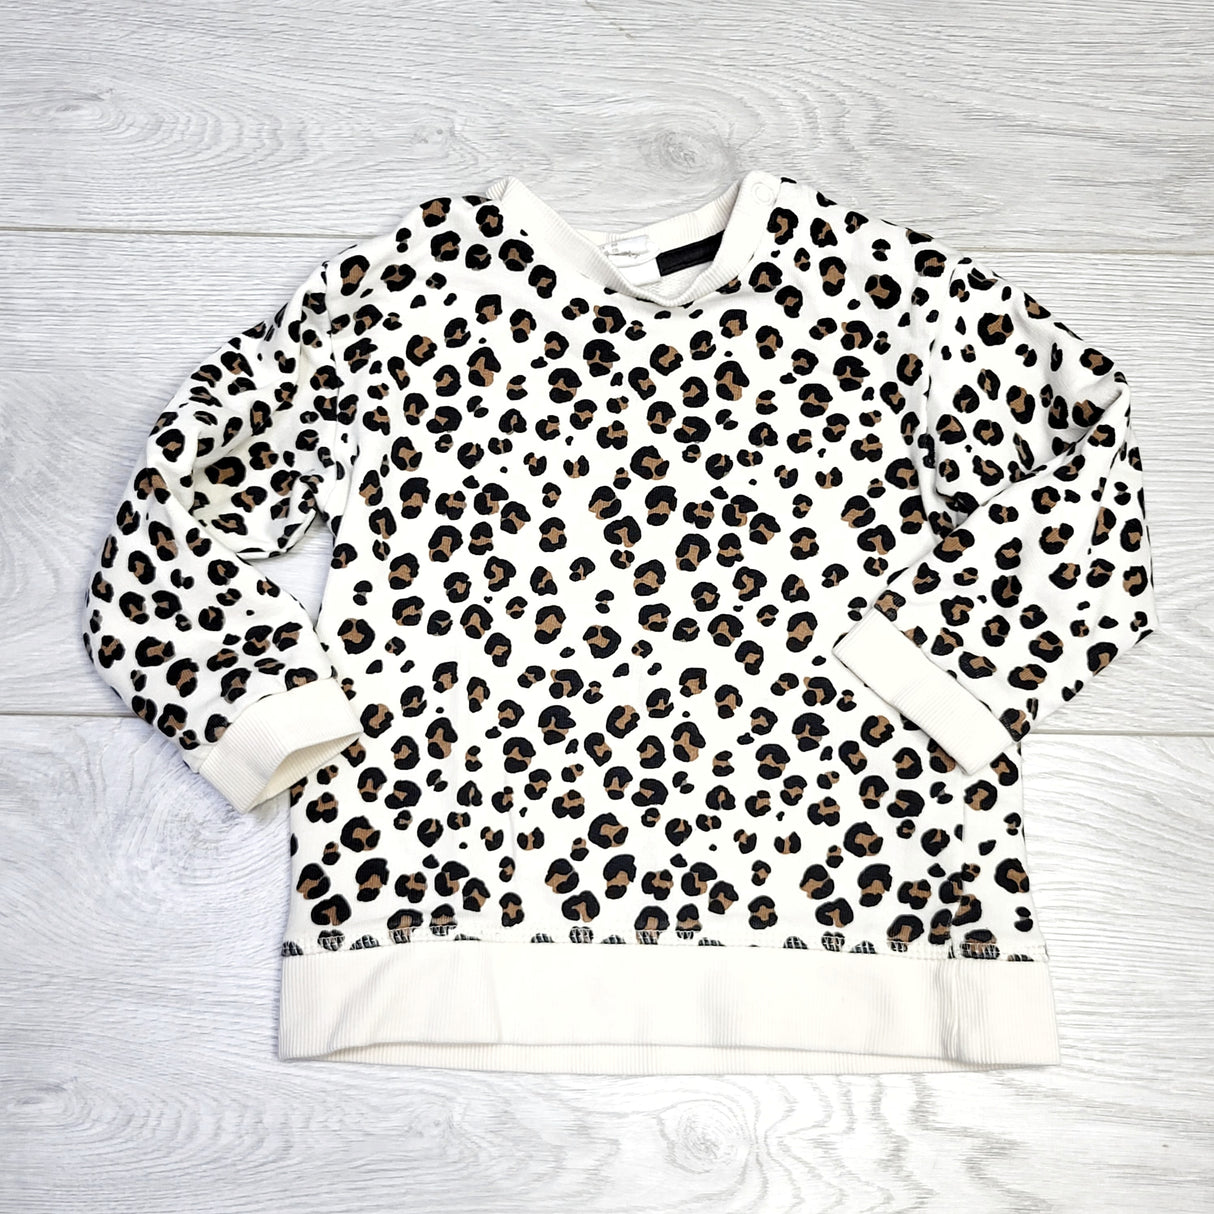 KJHN2 - H and M leopard print sweatshirt. Size 12-18 months